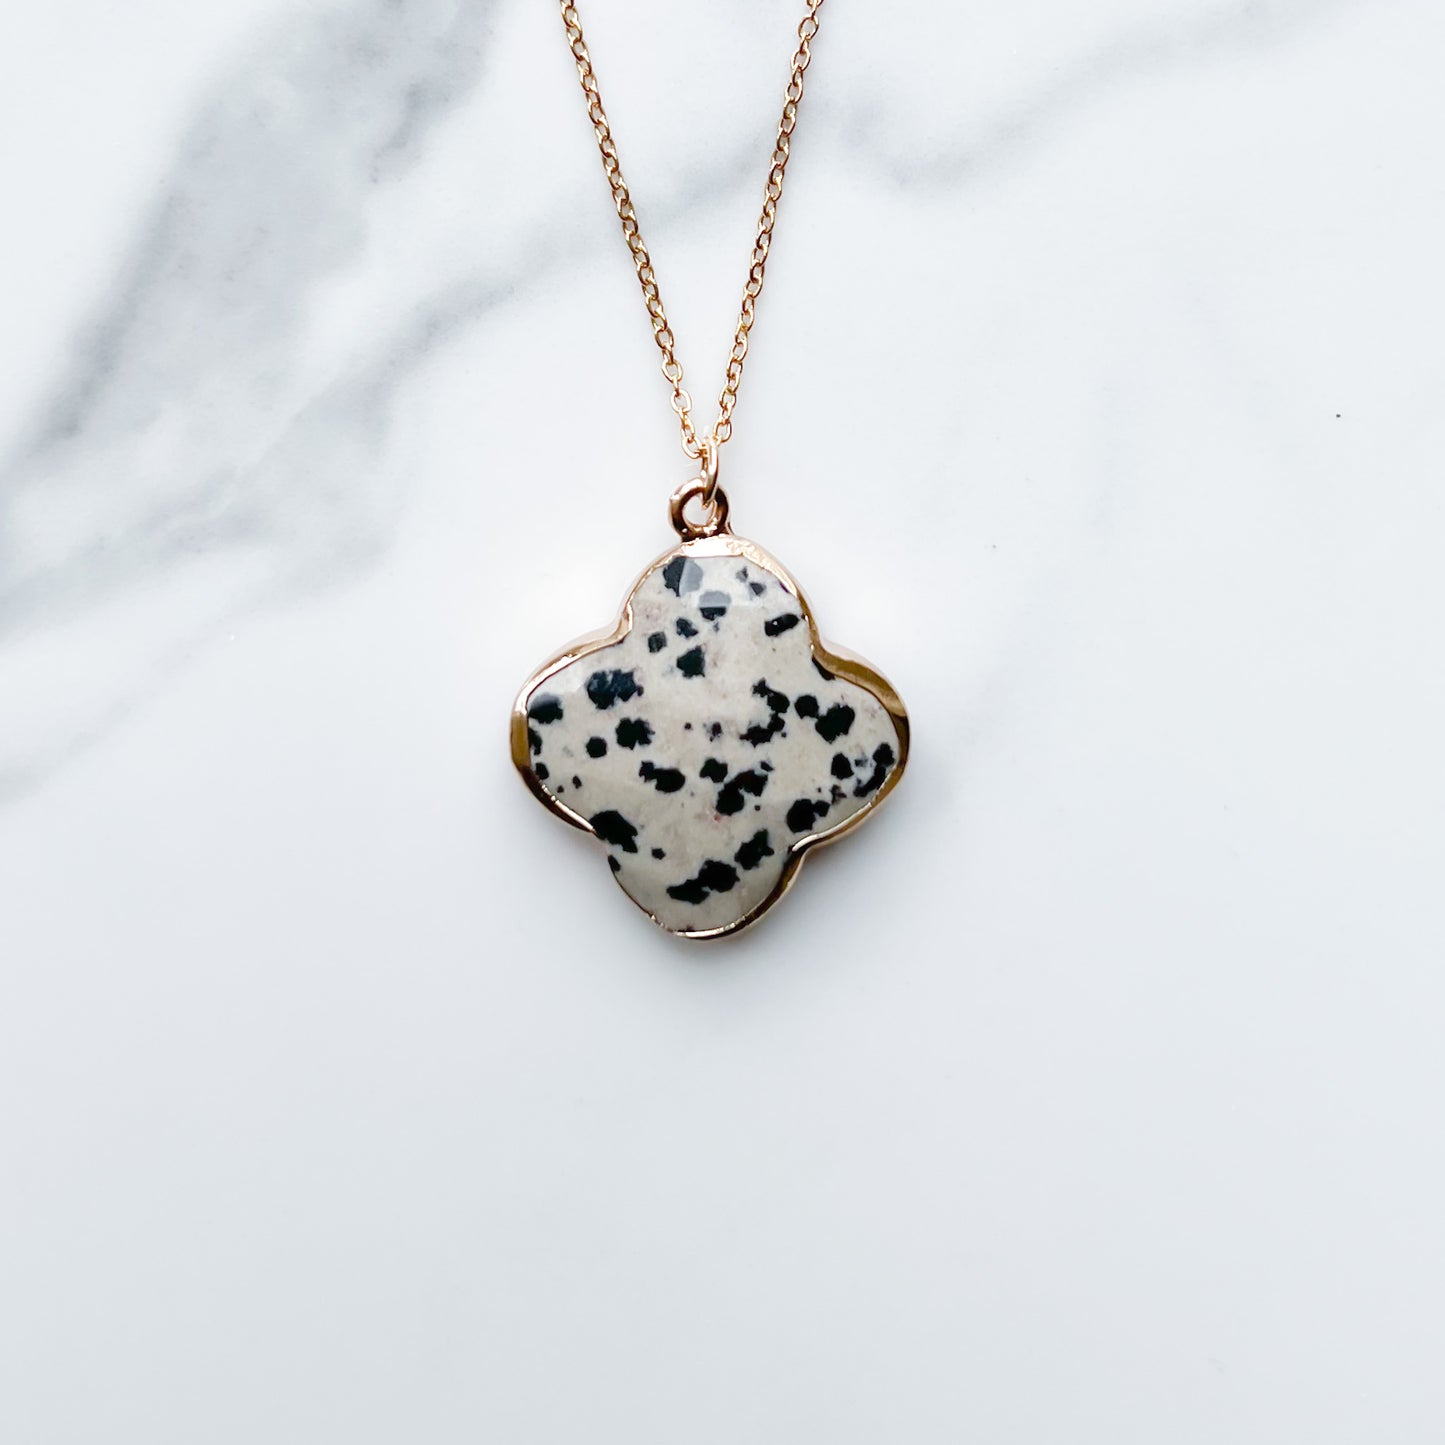 Semi precious healing gemstone clover shaped pendant necklace in dalmation jasper